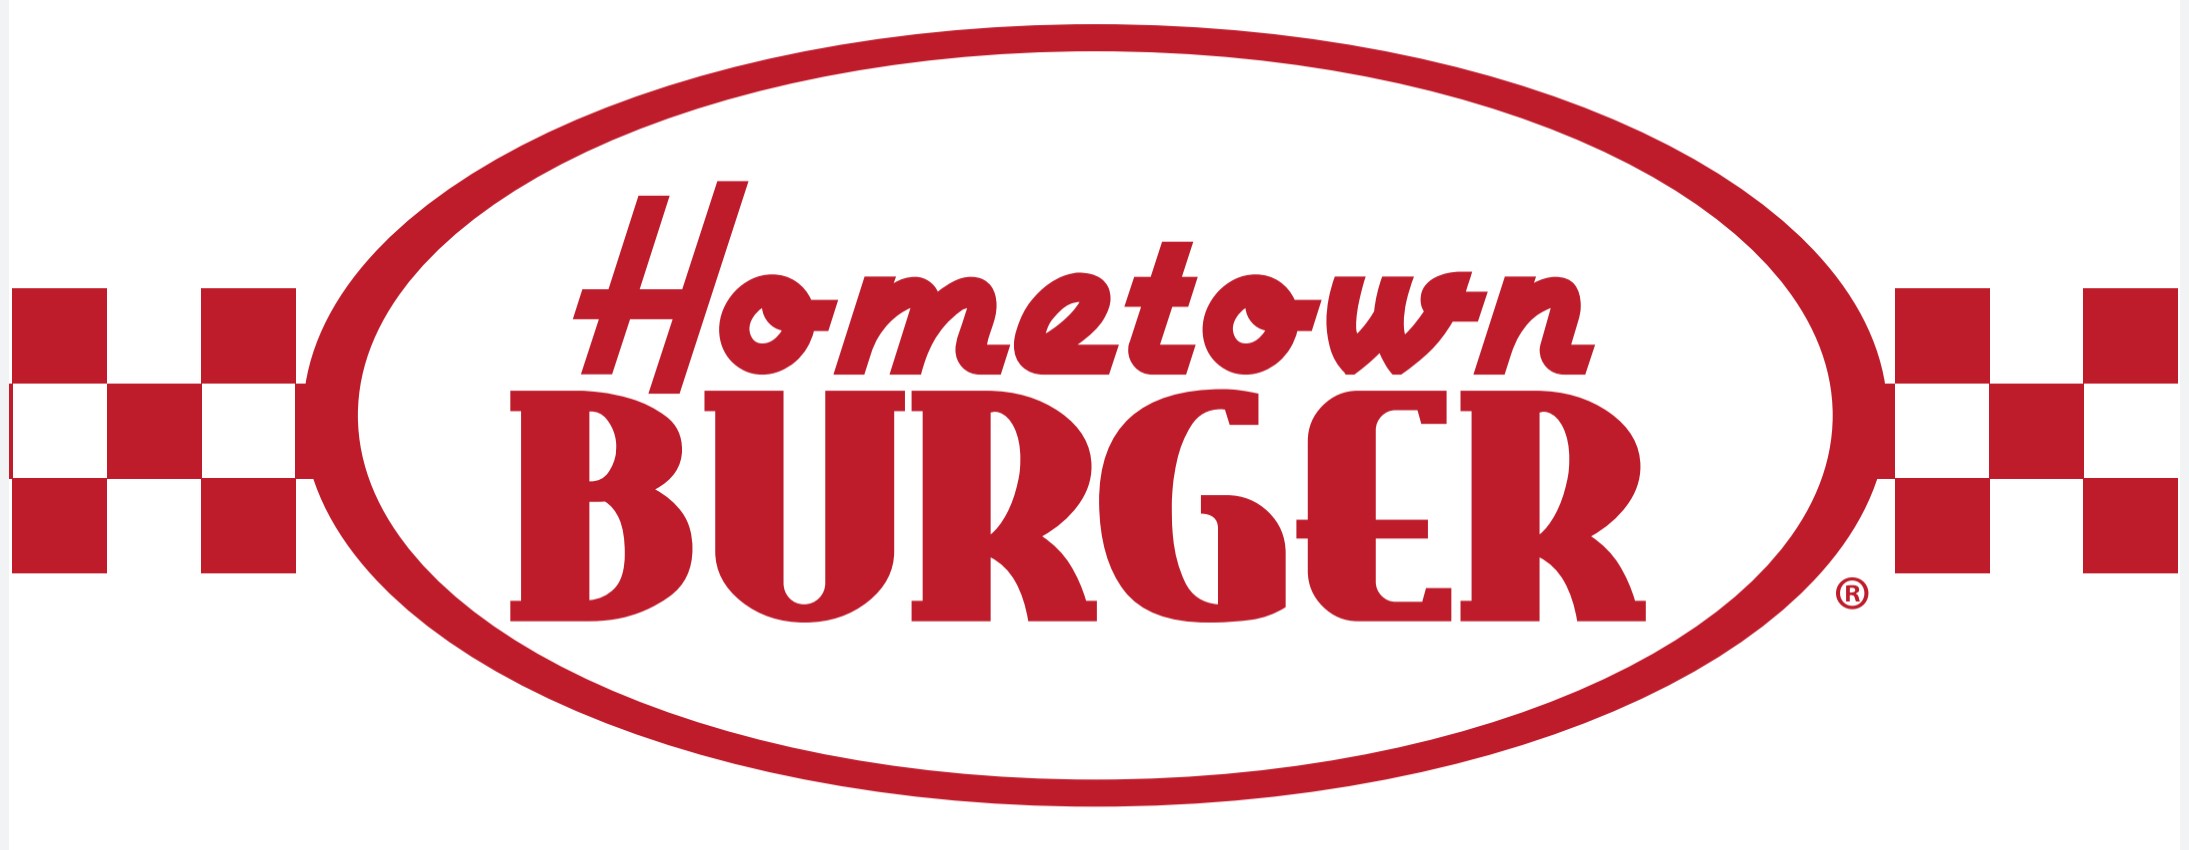 Hometown Burger Incident Report Form